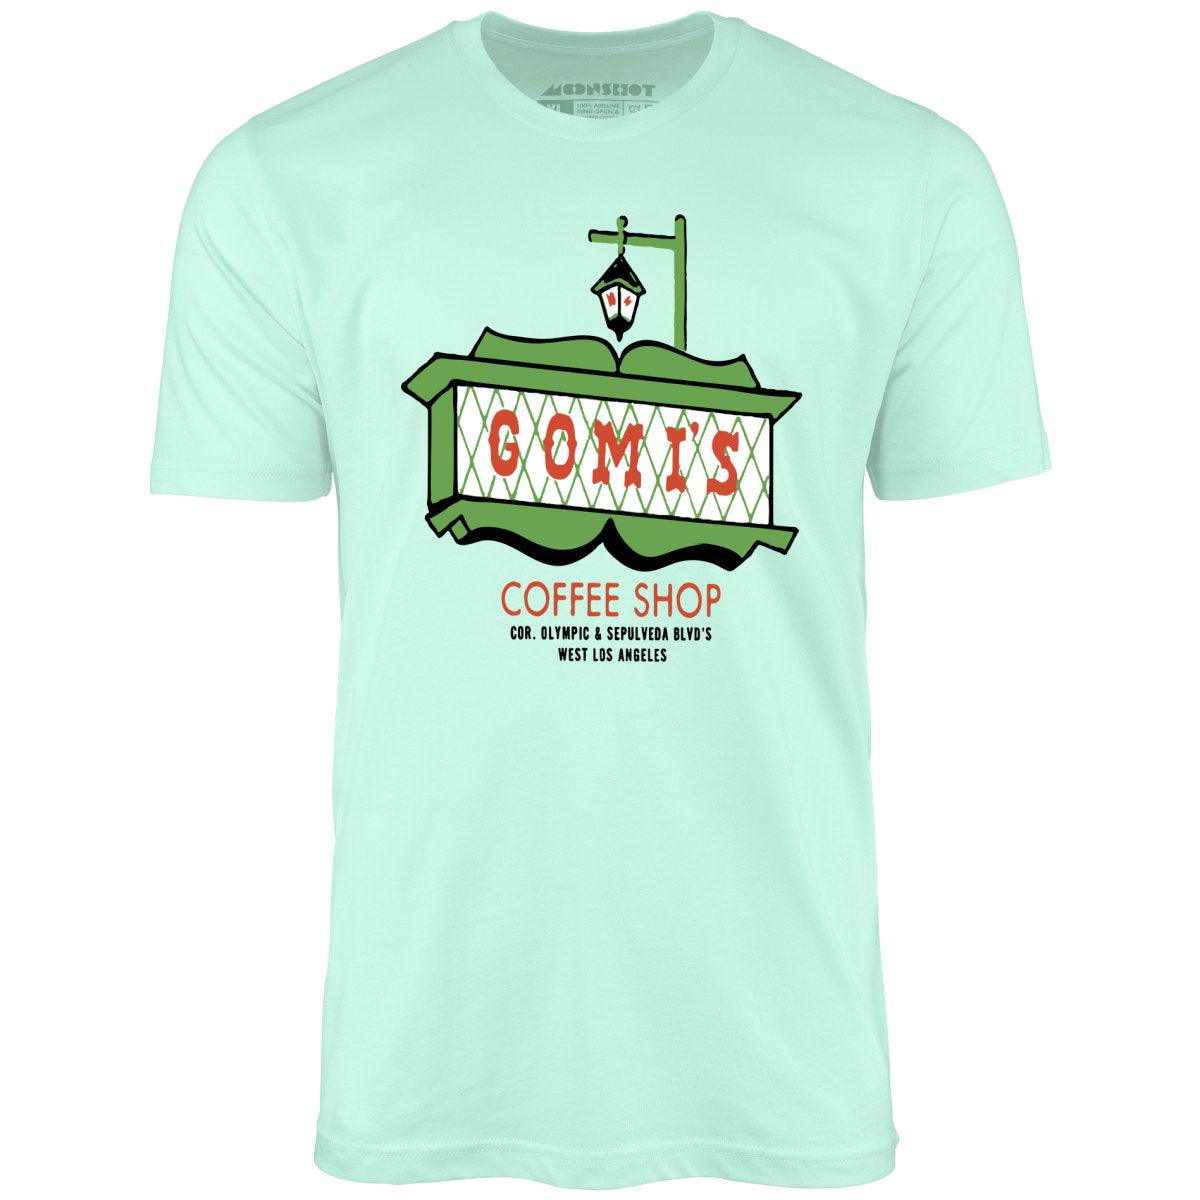 Gomi's Coffee Shop - Los Angeles, CA - Vintage Restaurant - Unisex T-Shirt